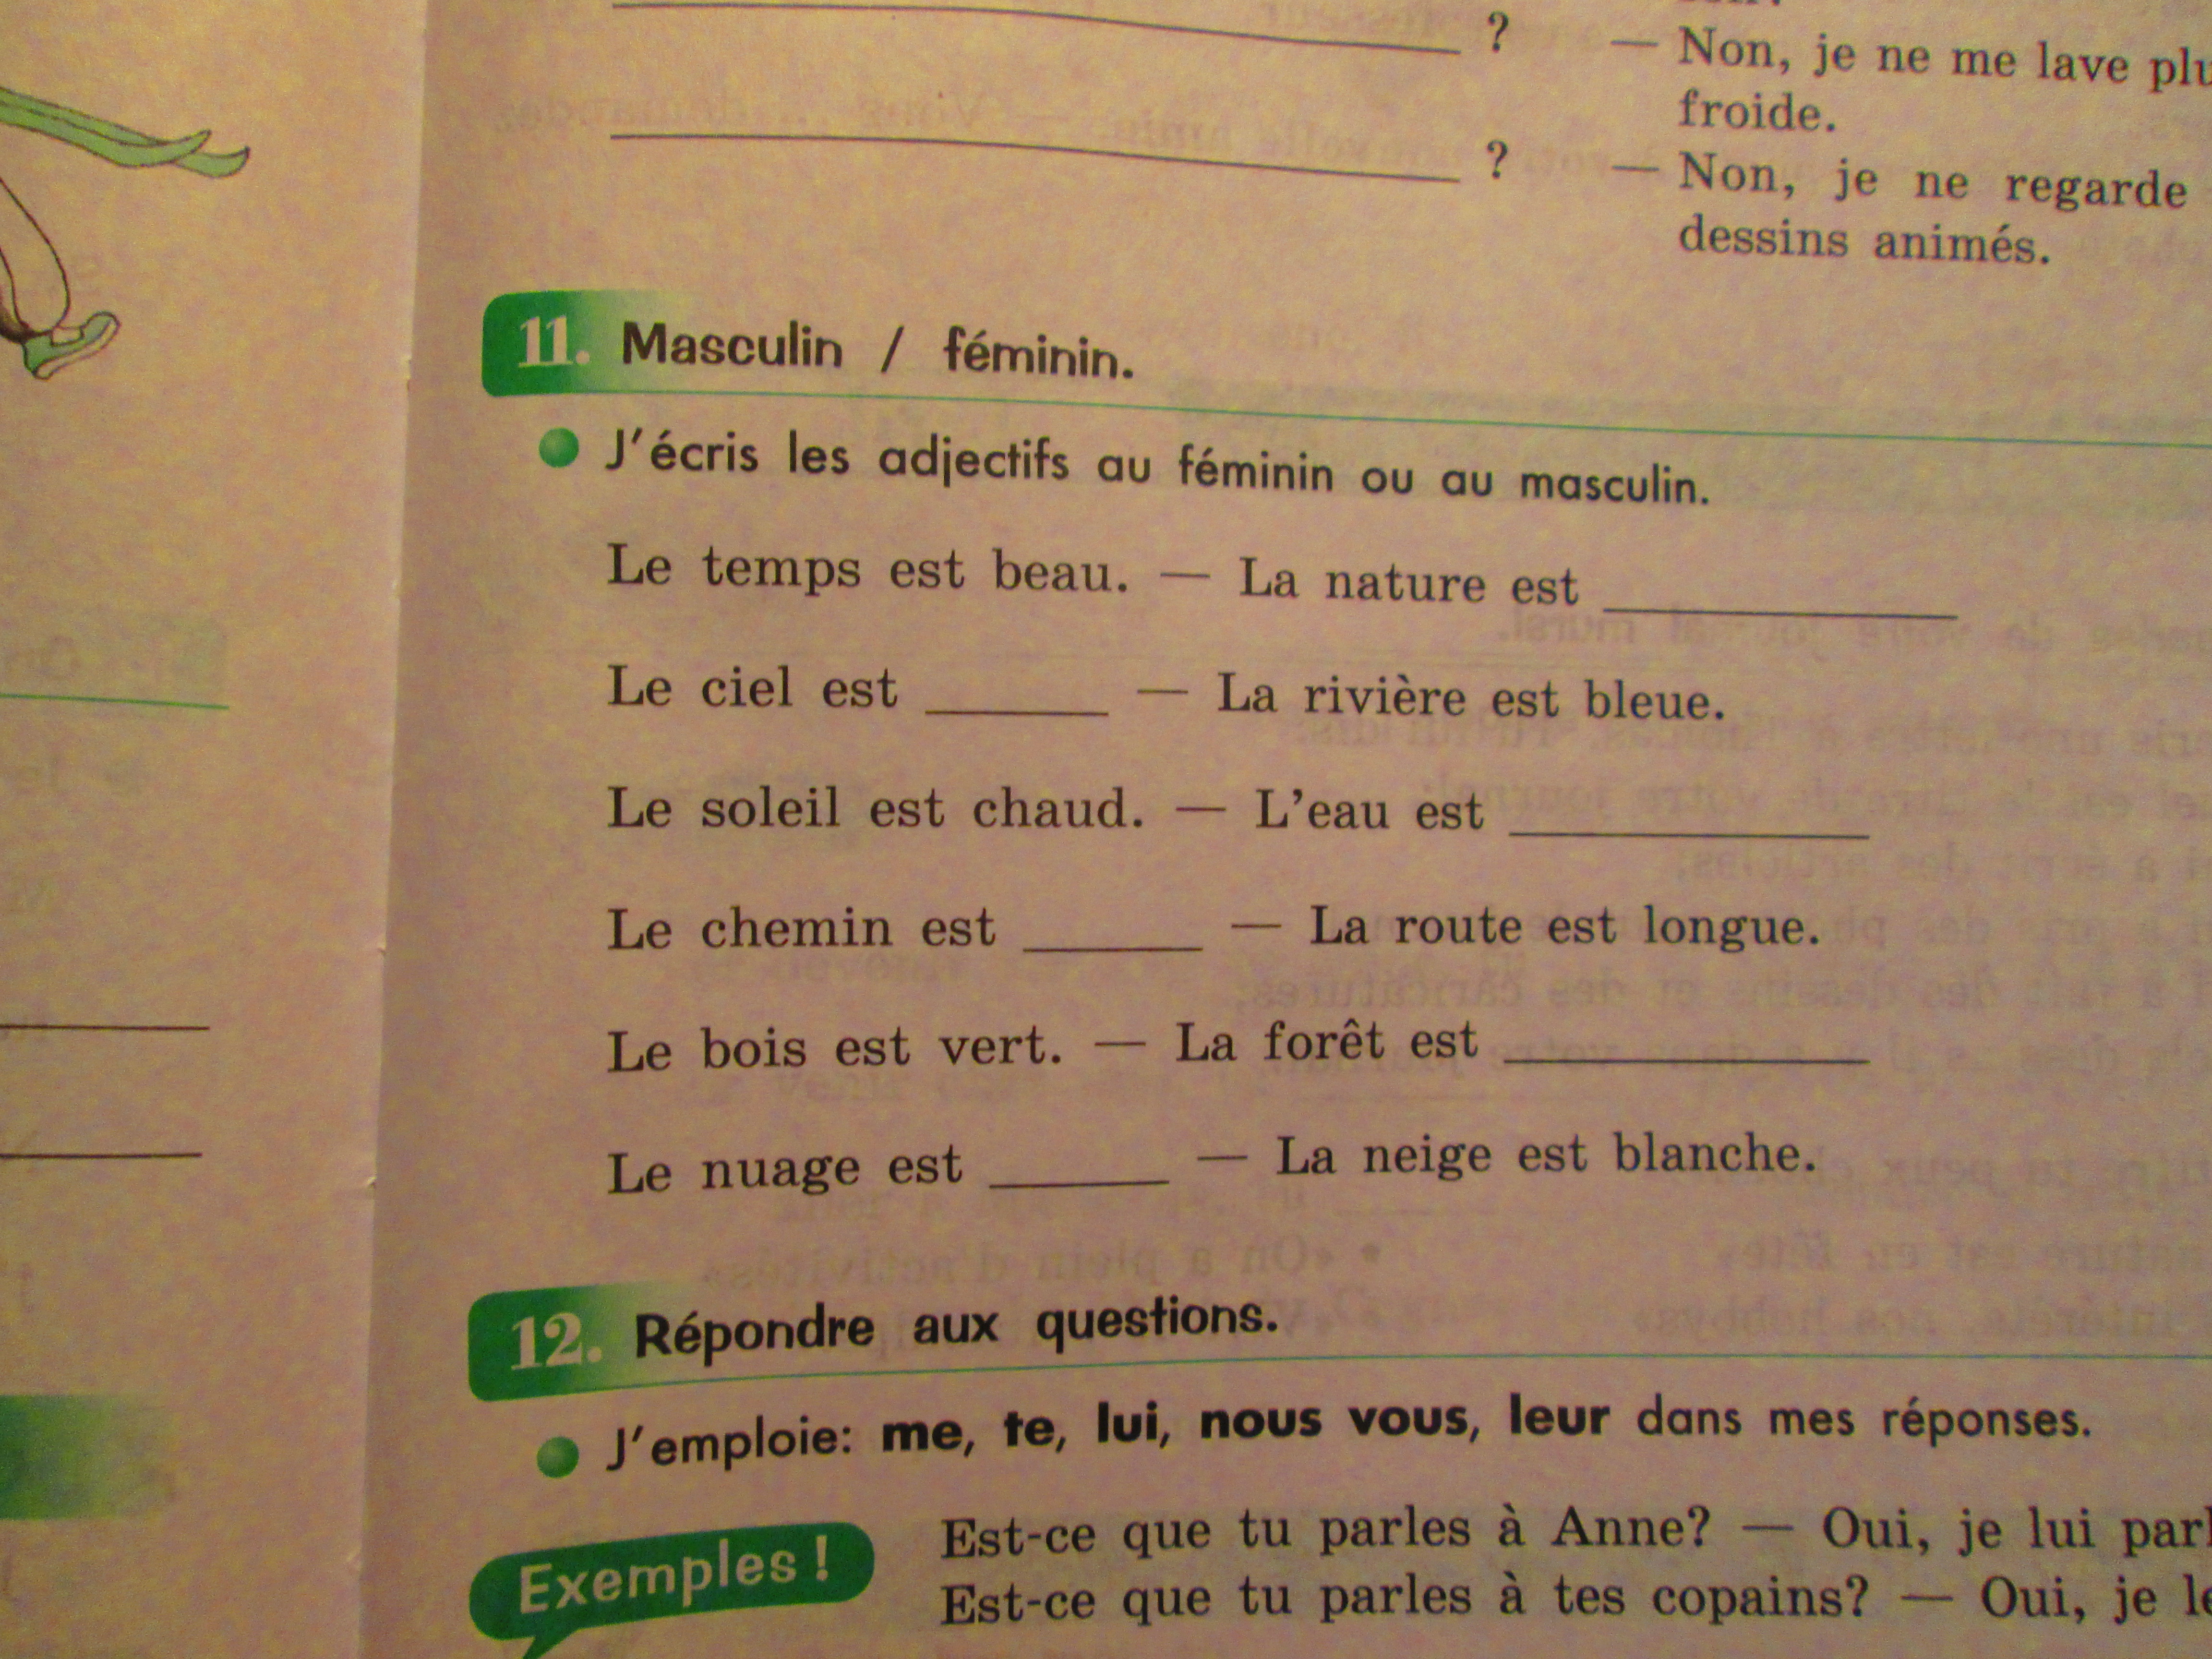 Срочно помогите по французскому языку задание №11, фото прикреплено?